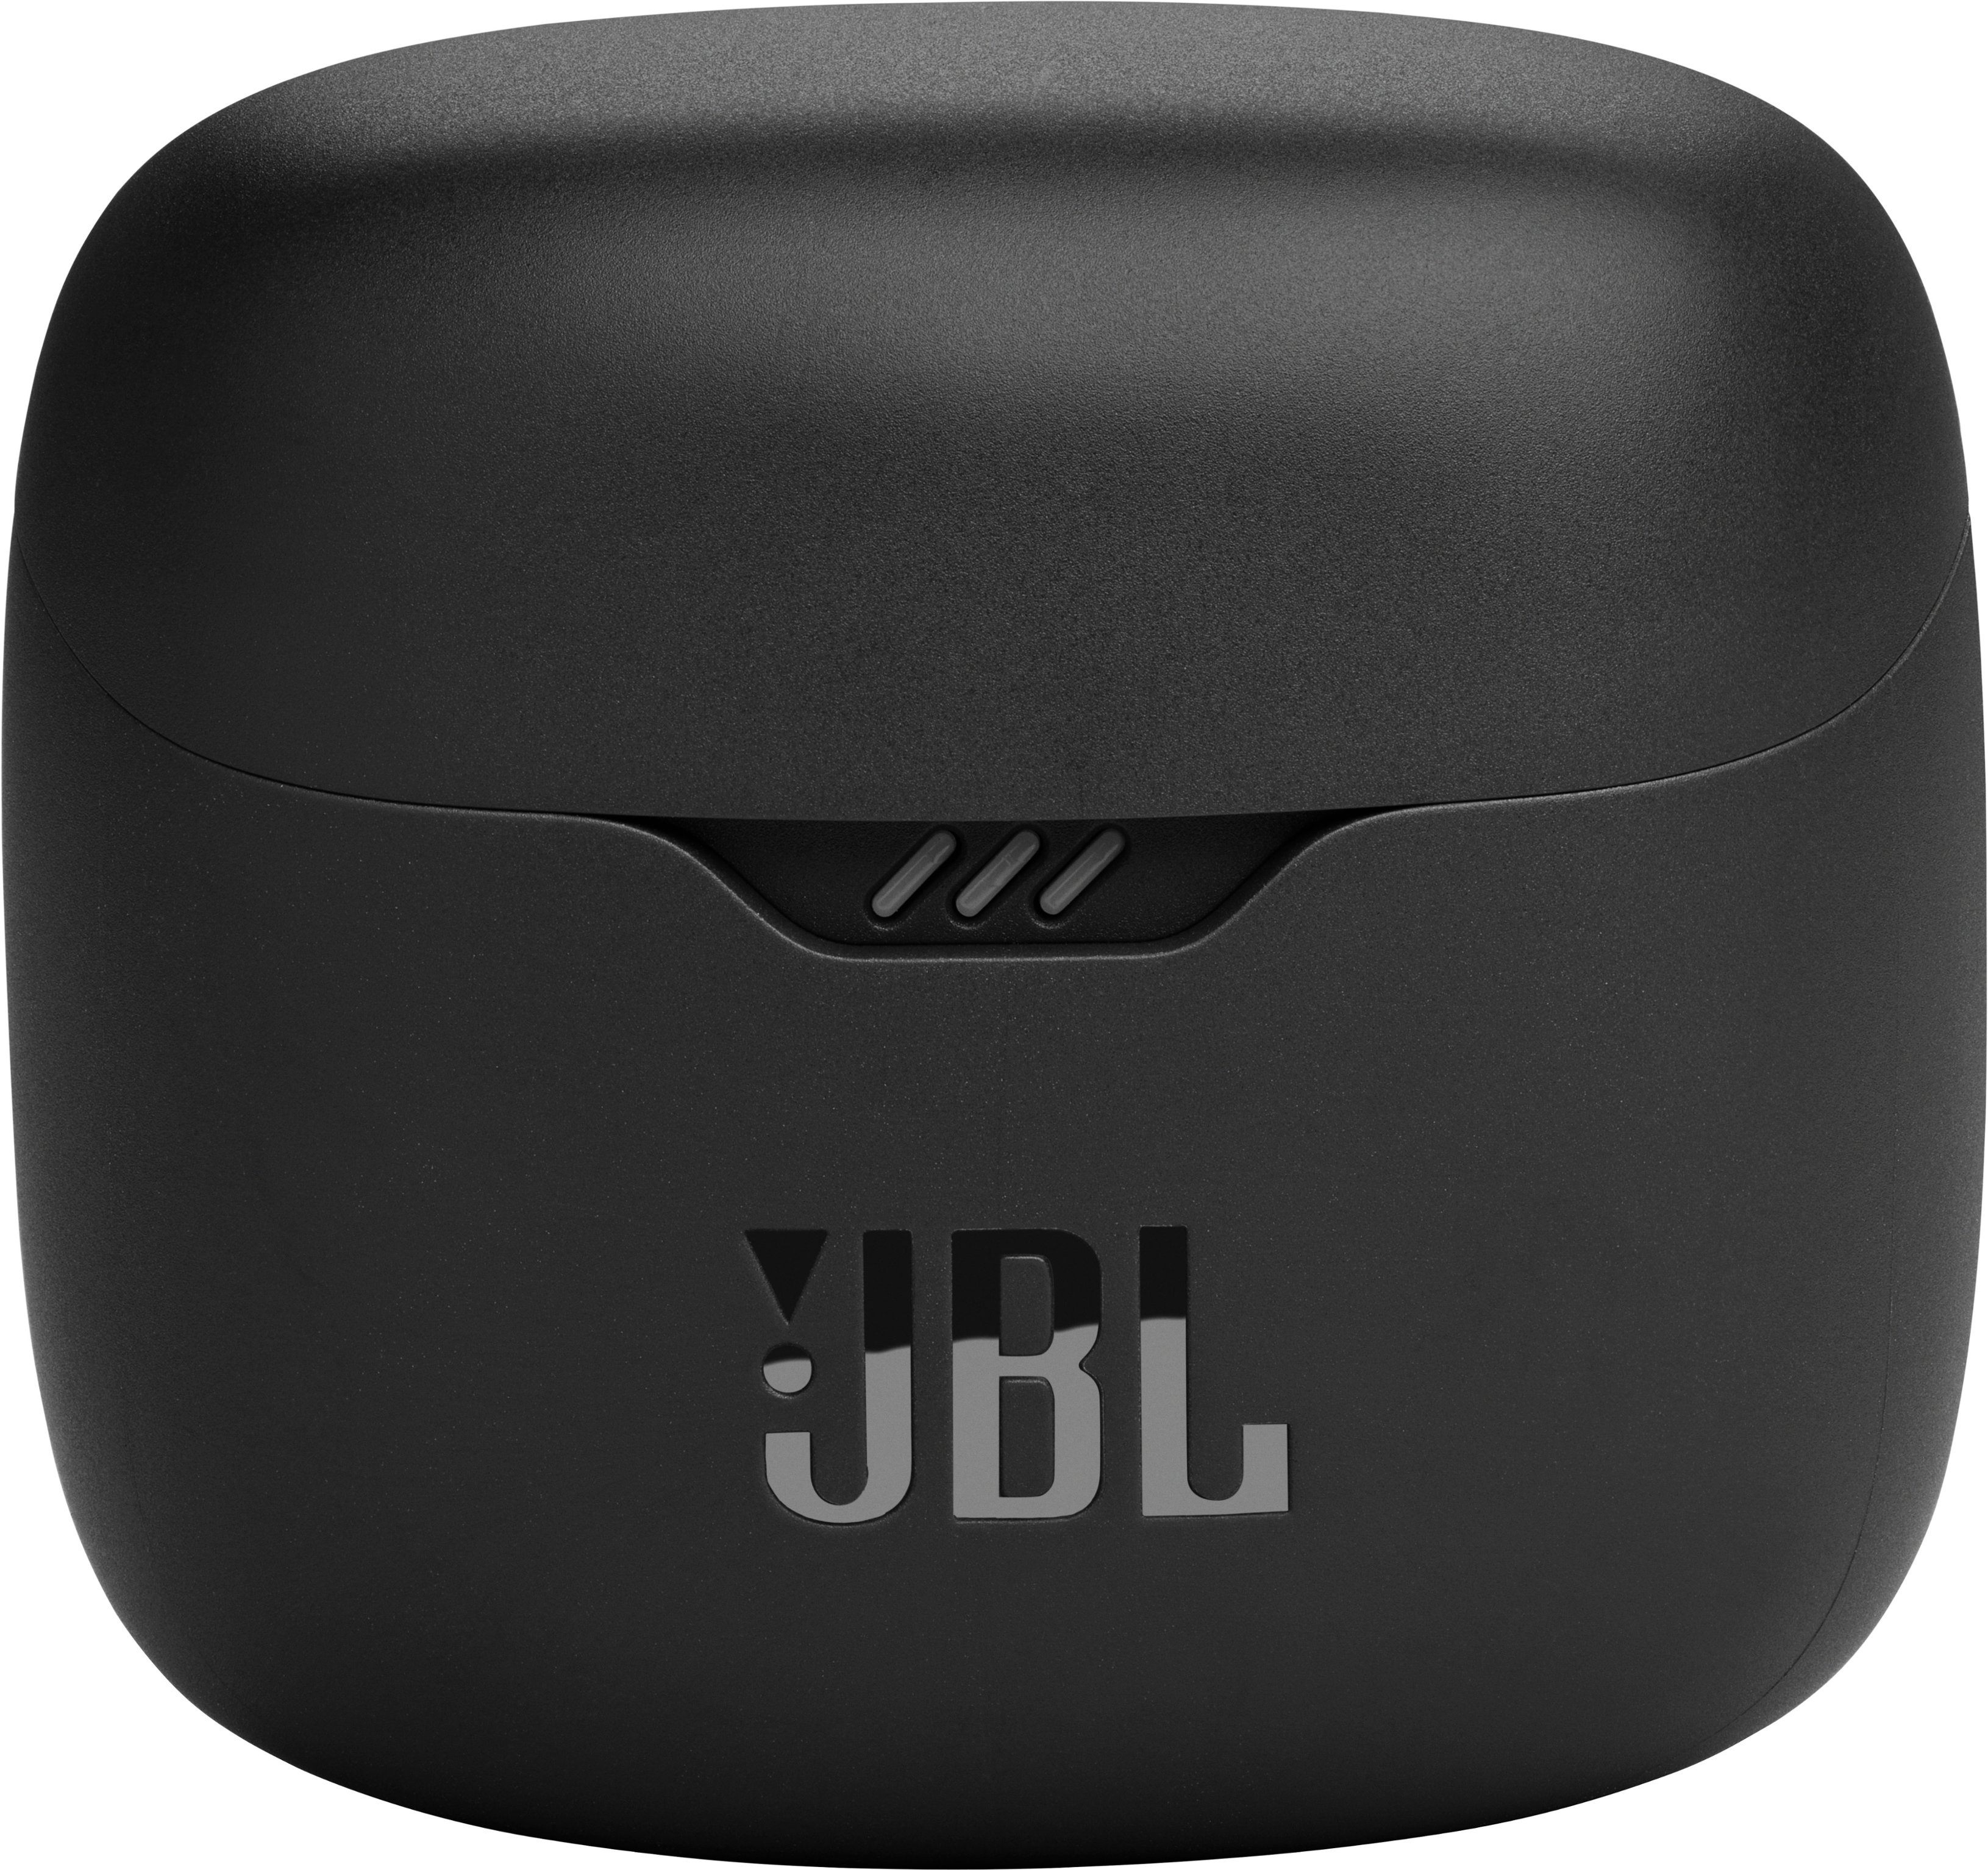 JBL Tune Flex Ghost Edition  True wireless Noise Cancelling earbuds